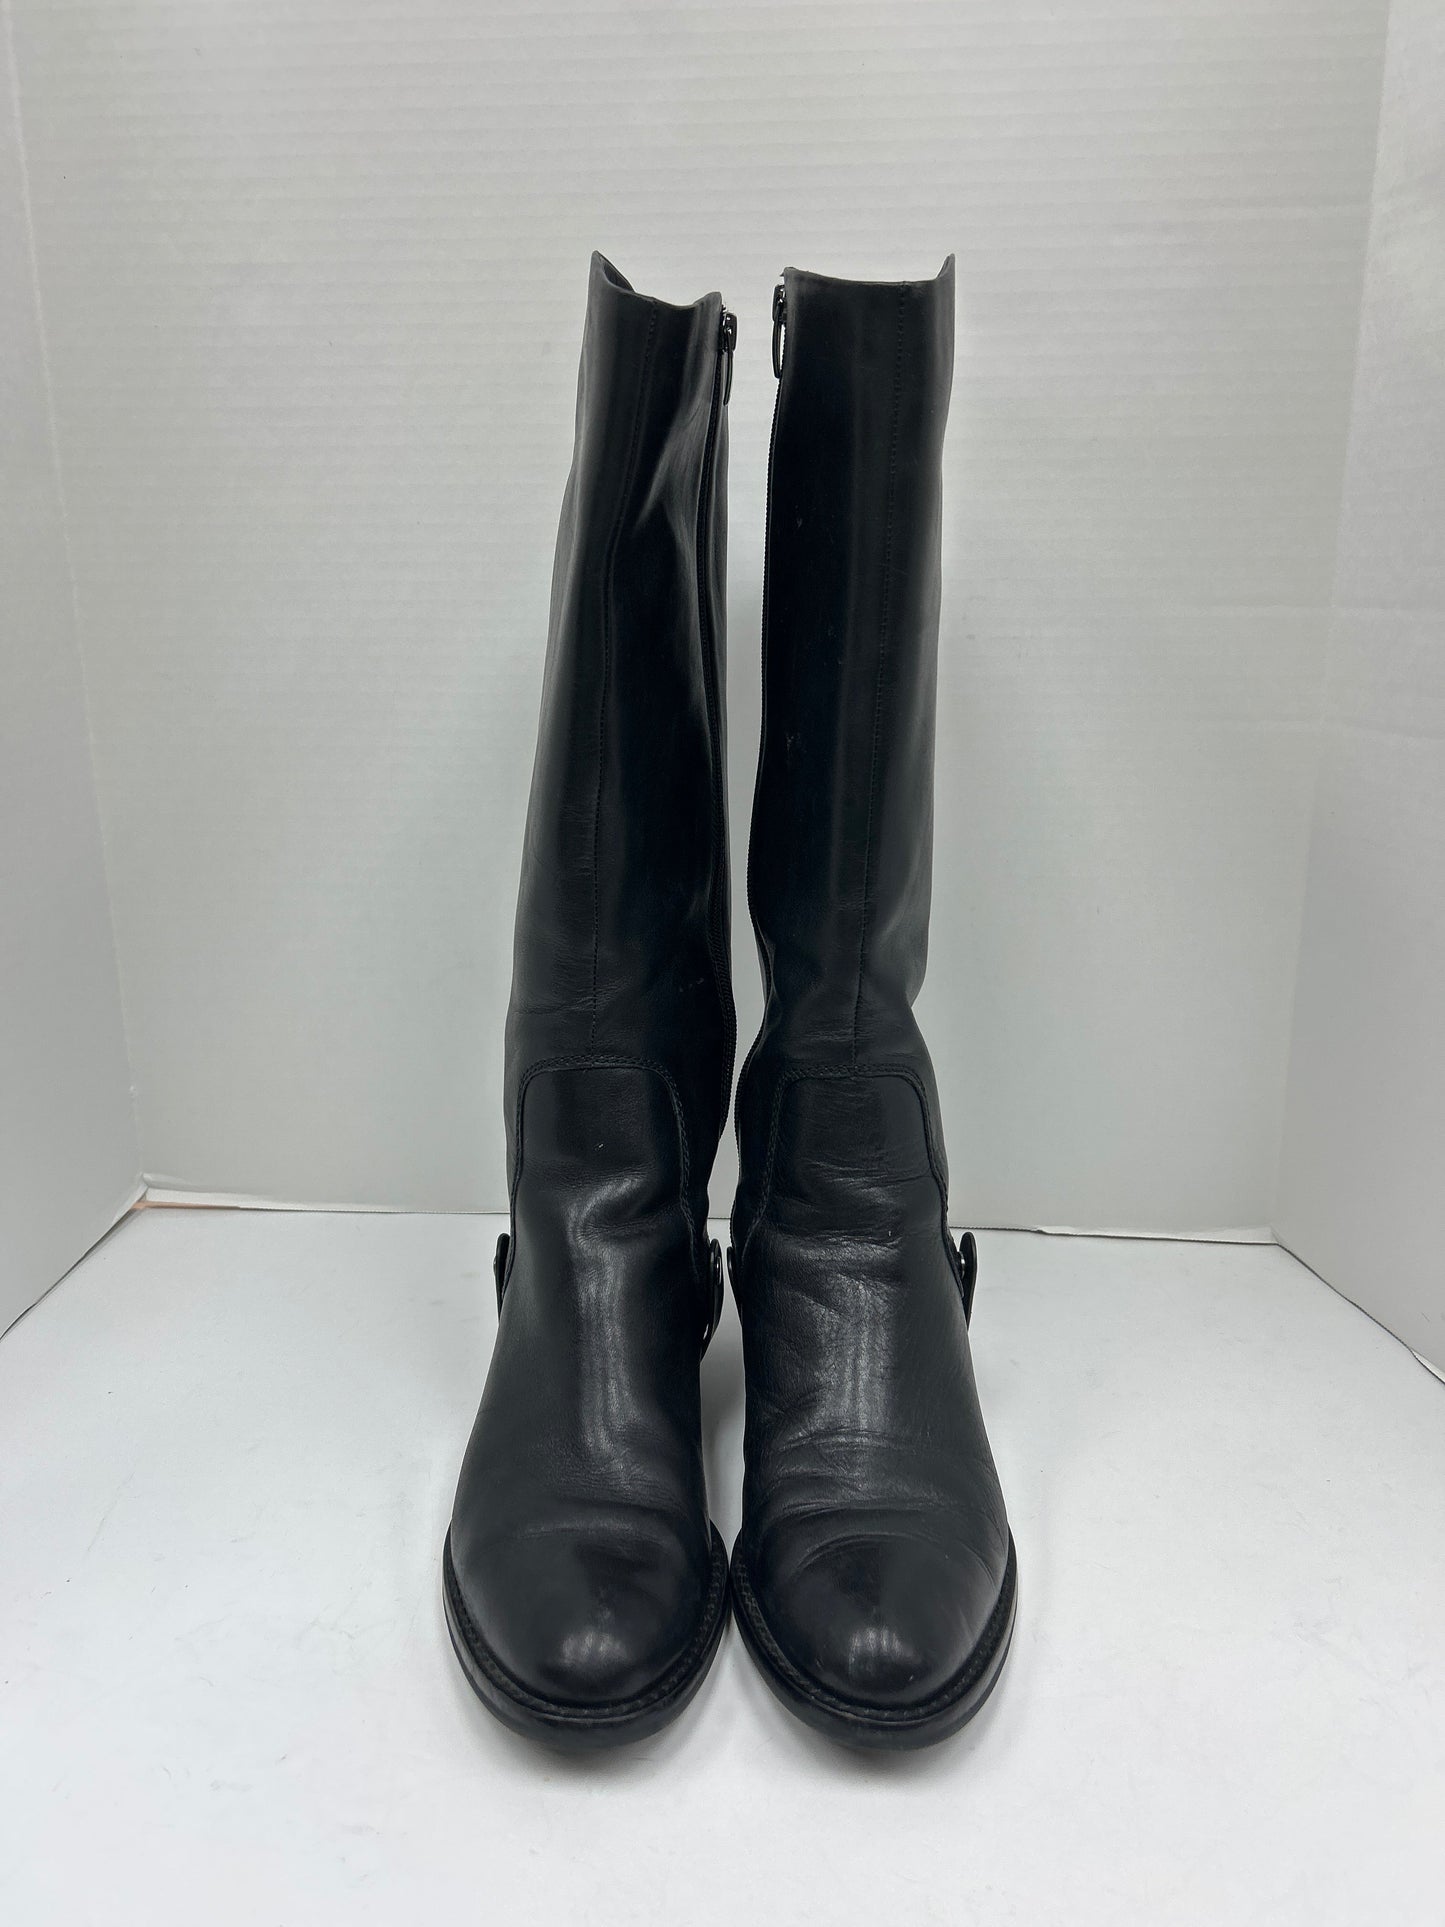 Boots Knee Flats By Via Spiga  Size: 7